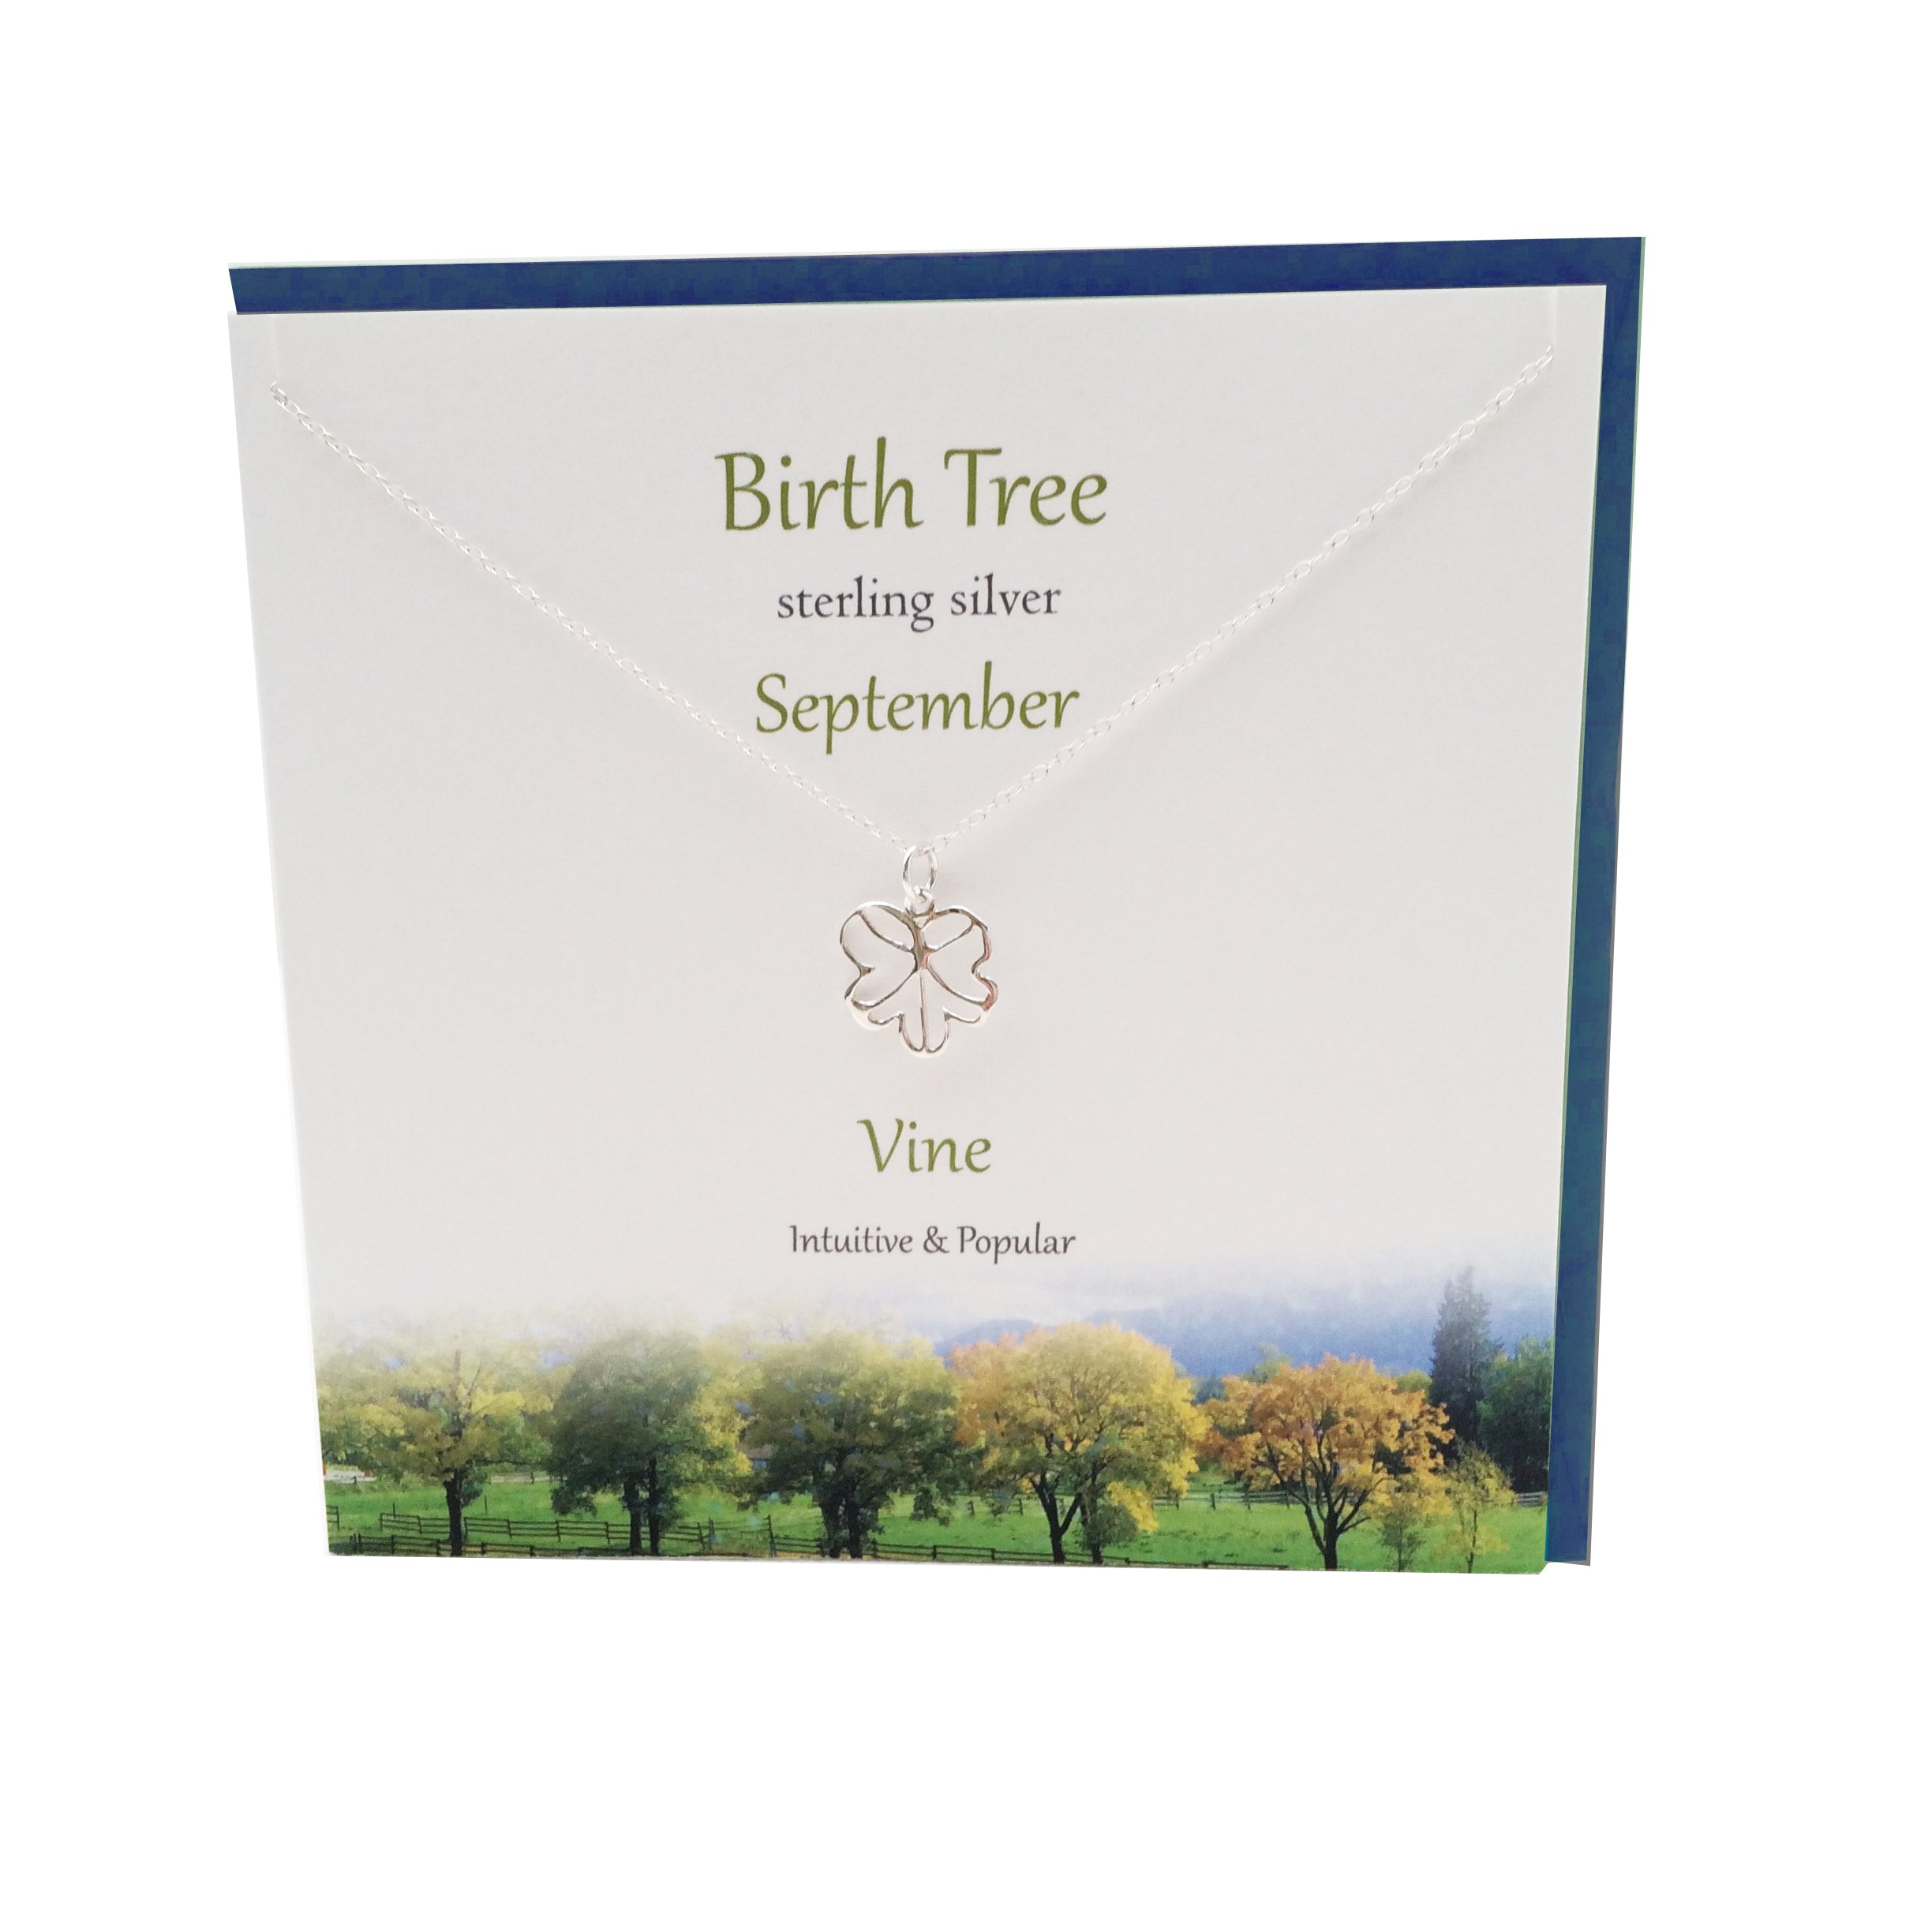 September Birth Tree Vine silver necklace | The Silver Studio Scotland